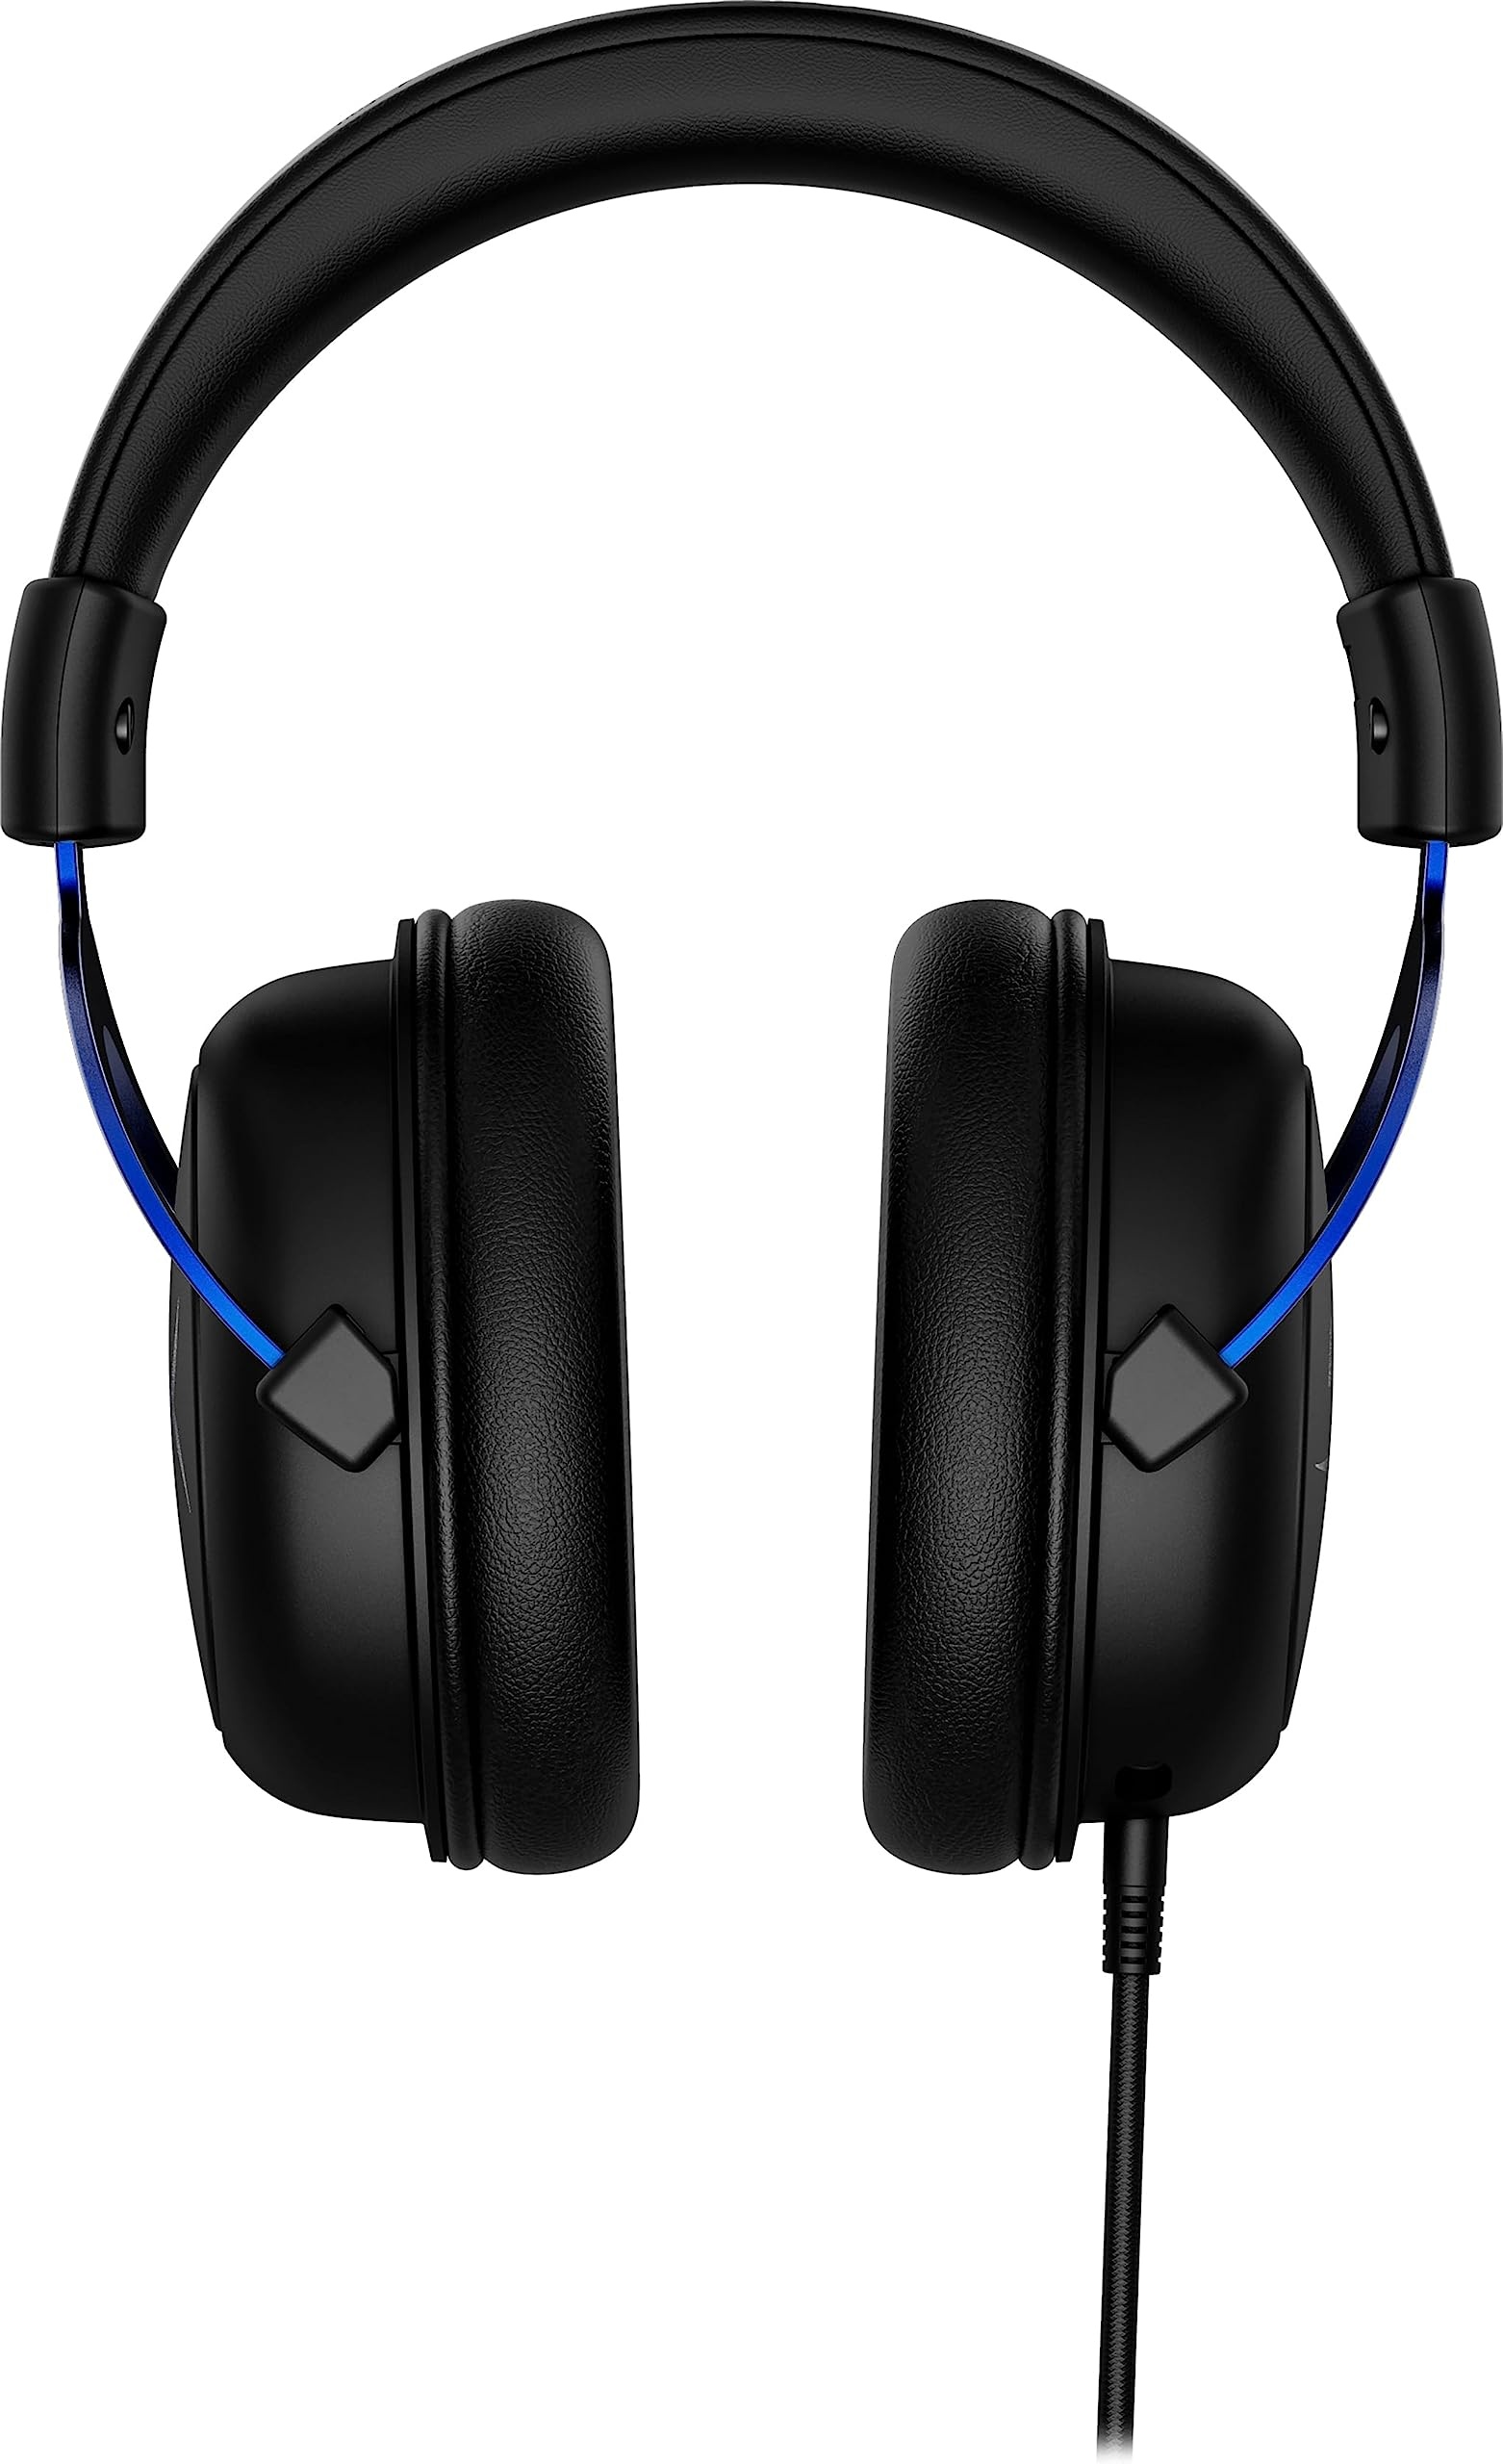 HyperX Cloud Gaming-Headset - Offiziell PlayStation-lizenziertes Headse für PS4 und PS5, mit In-Line Audio Control, abnehmbares Mikrofon mit Rauschunterdrückung